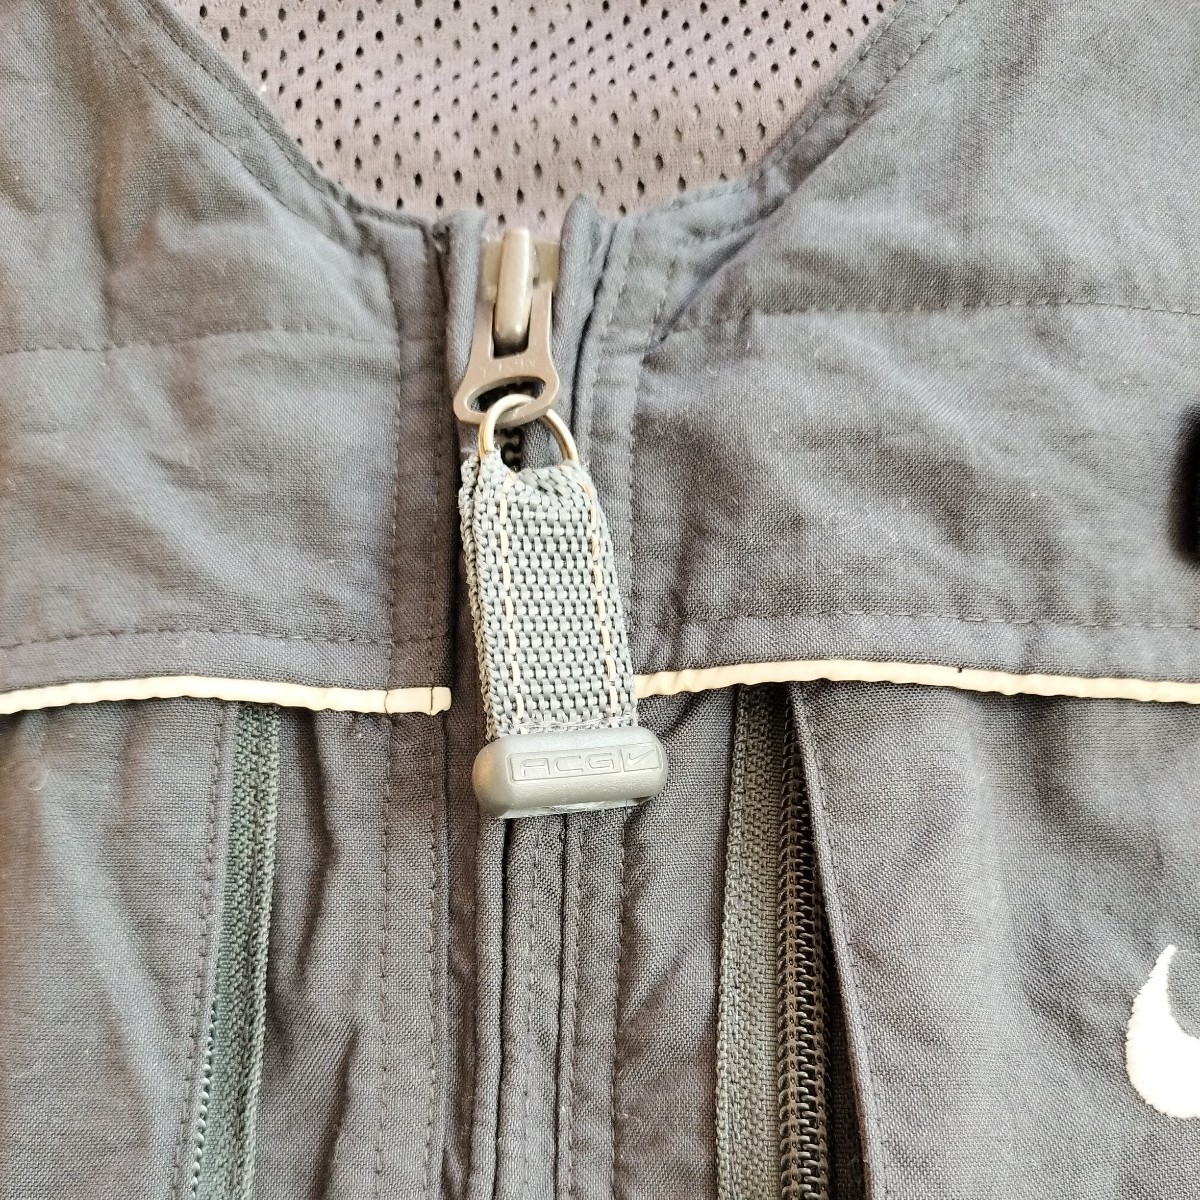 Nike ACG Utility Tactical Vest All Conditions Gear タクティカルベスト mmw sacai nocta ispa travis off white 90s 00s y2k